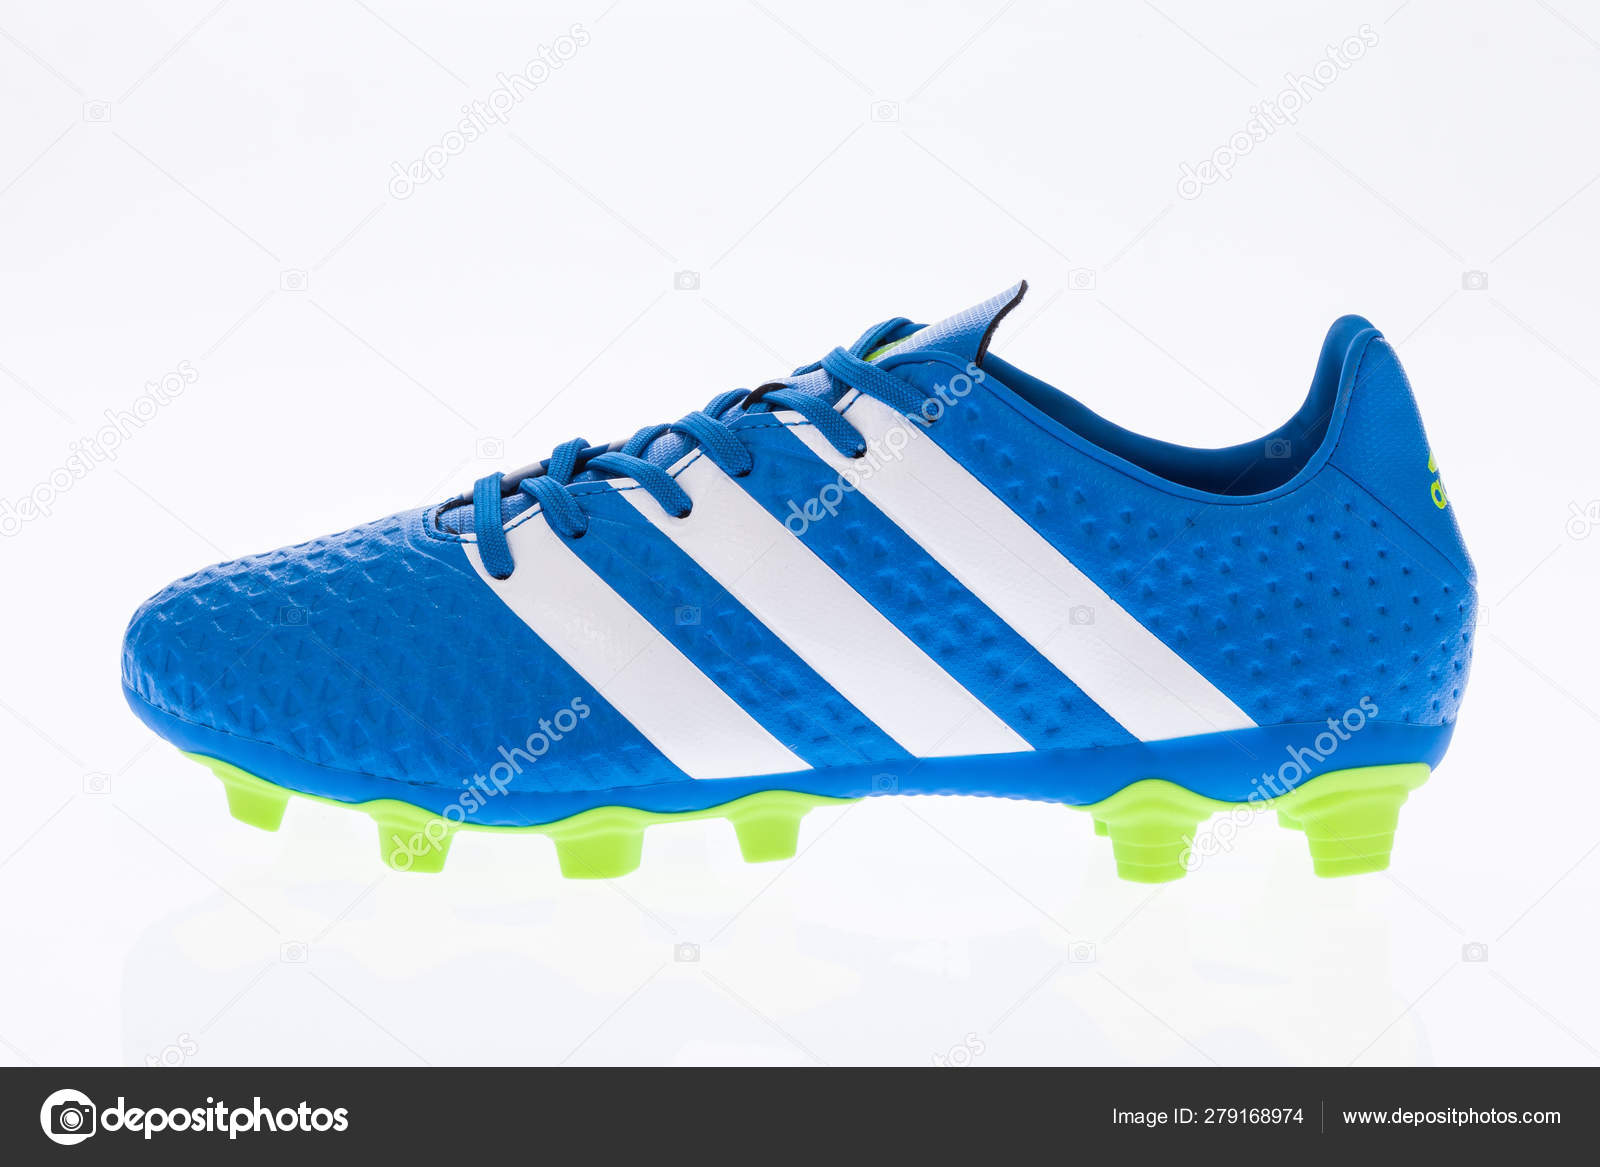 adidas shoes football 2019